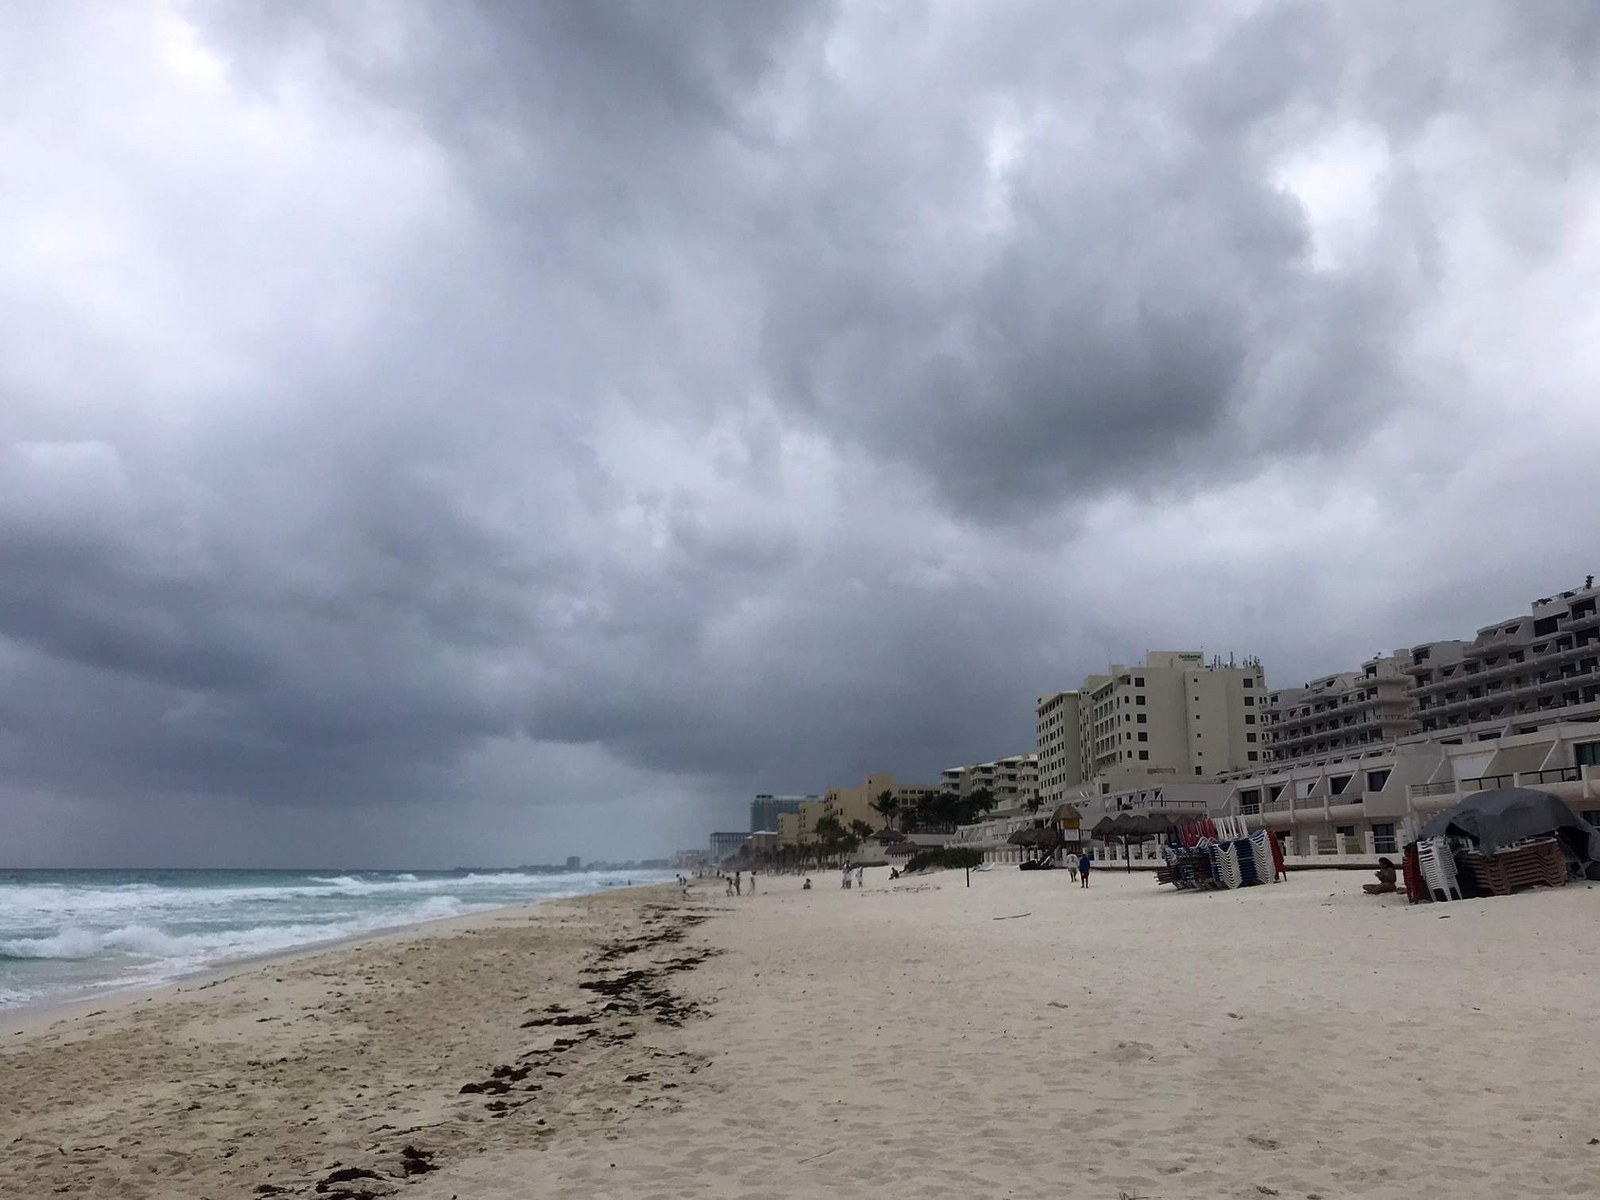 Clima en Cancún: SMN pronostica lluvias fuertes este 06 de junio